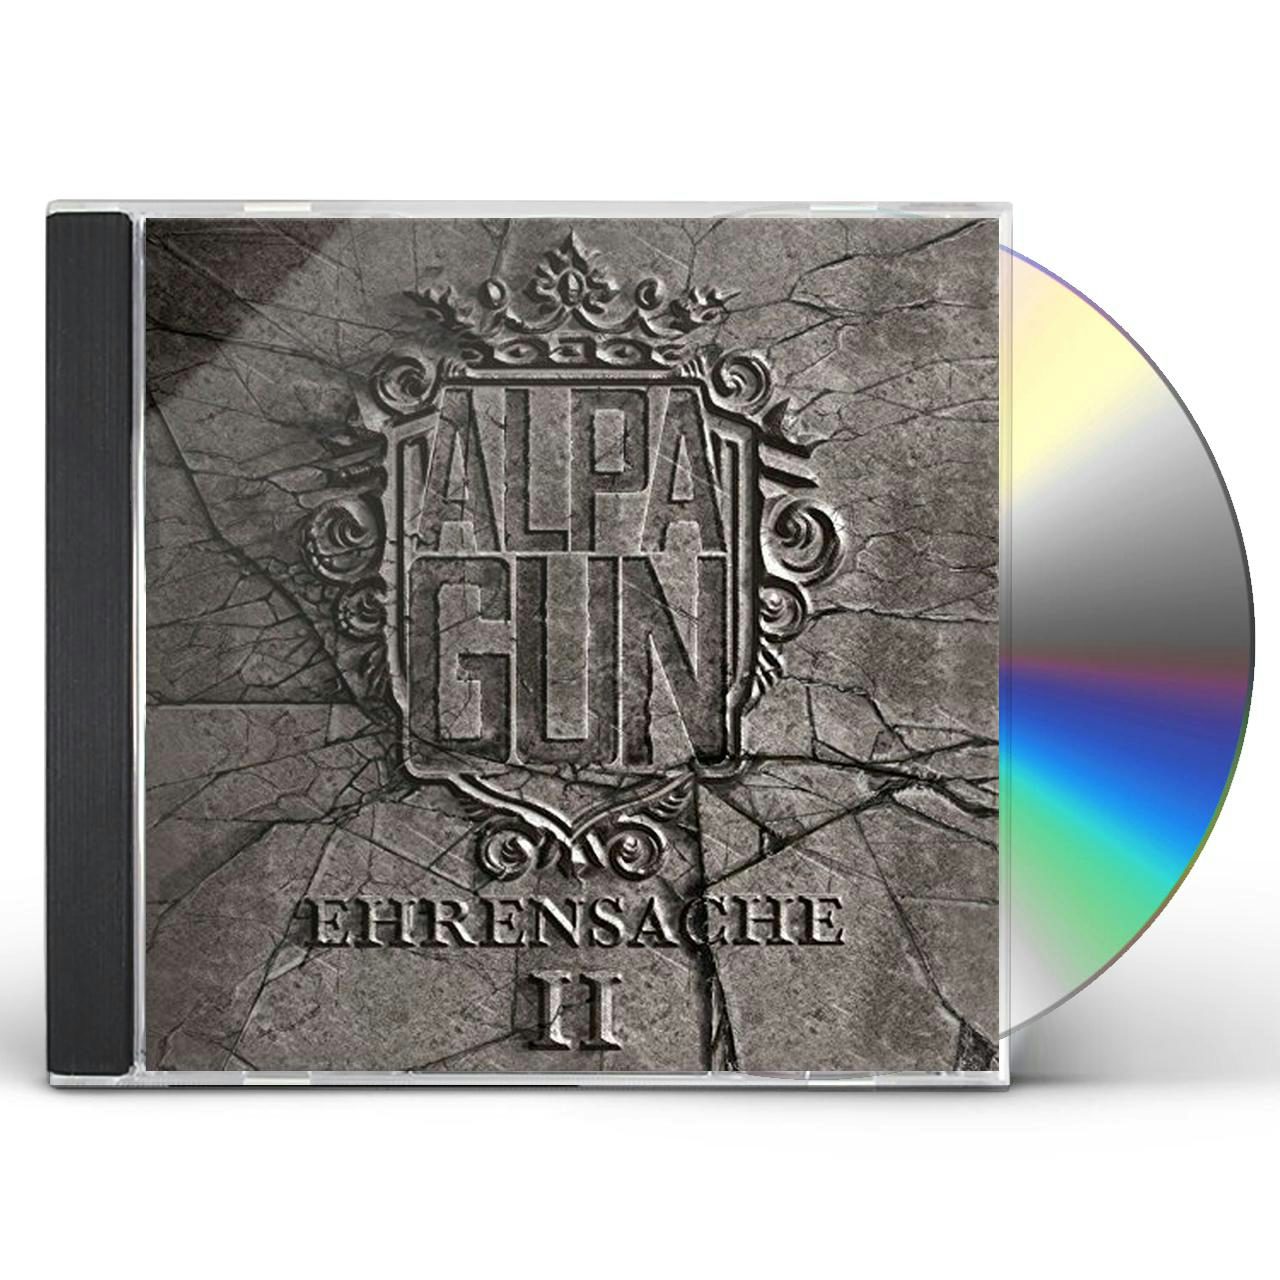 Alpa Gun EHRENSACHE 2 CD $28.99$25.99